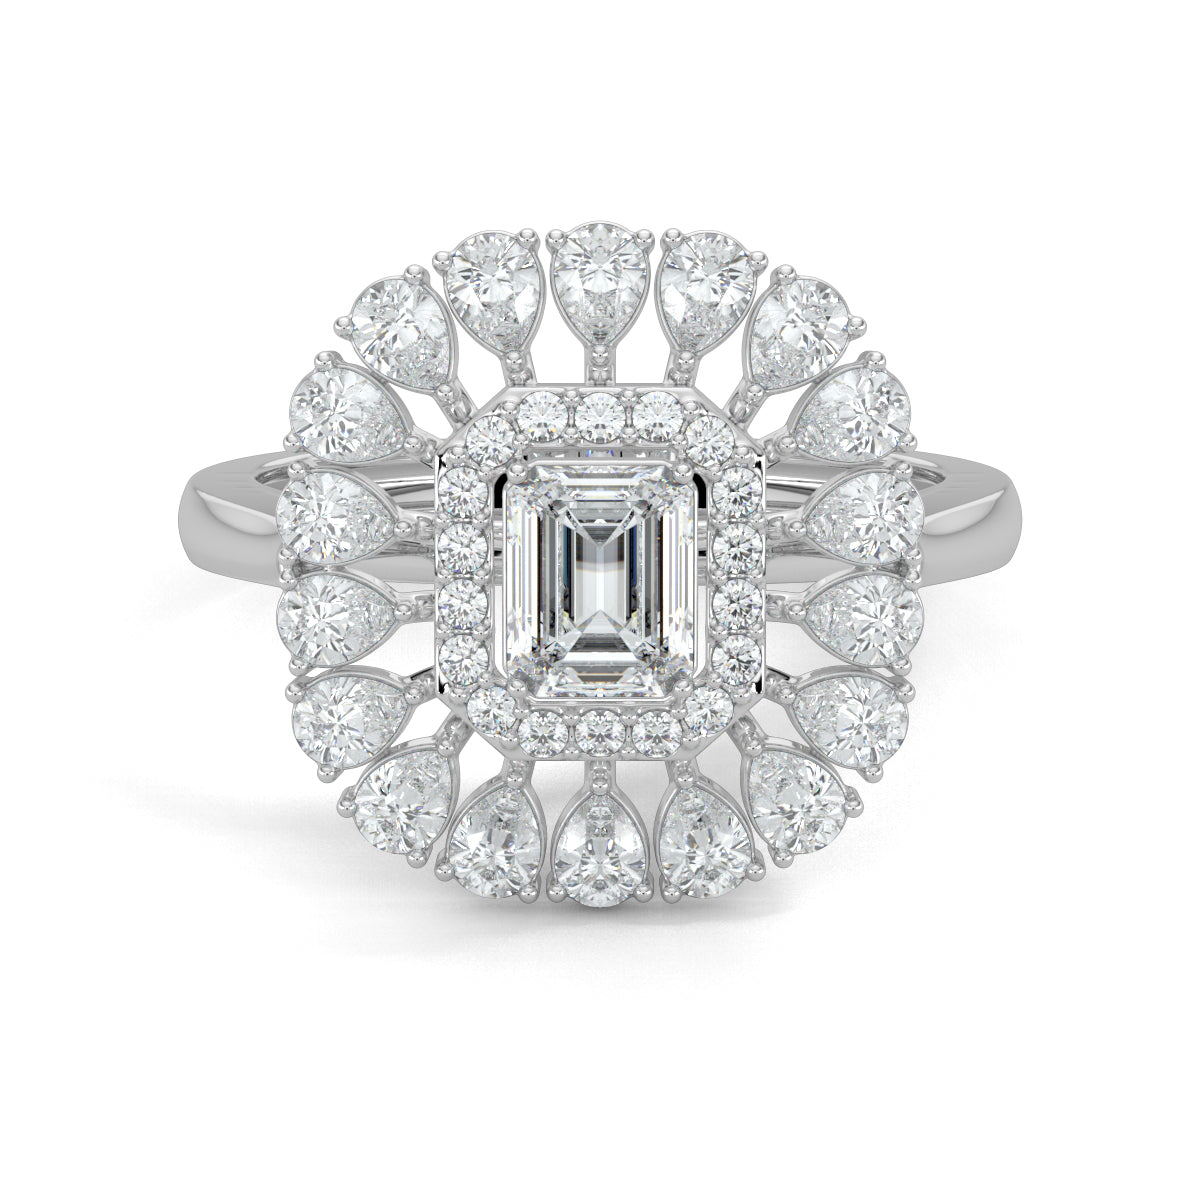 White Gold, Diamond Ring, natural diamond ring, lab-grown diamond ring, exquisite diamond ring, emerald shape diamond, round diamond border, pear-shaped diamond accents, elegant jewelry, statement ring, cocktail ring